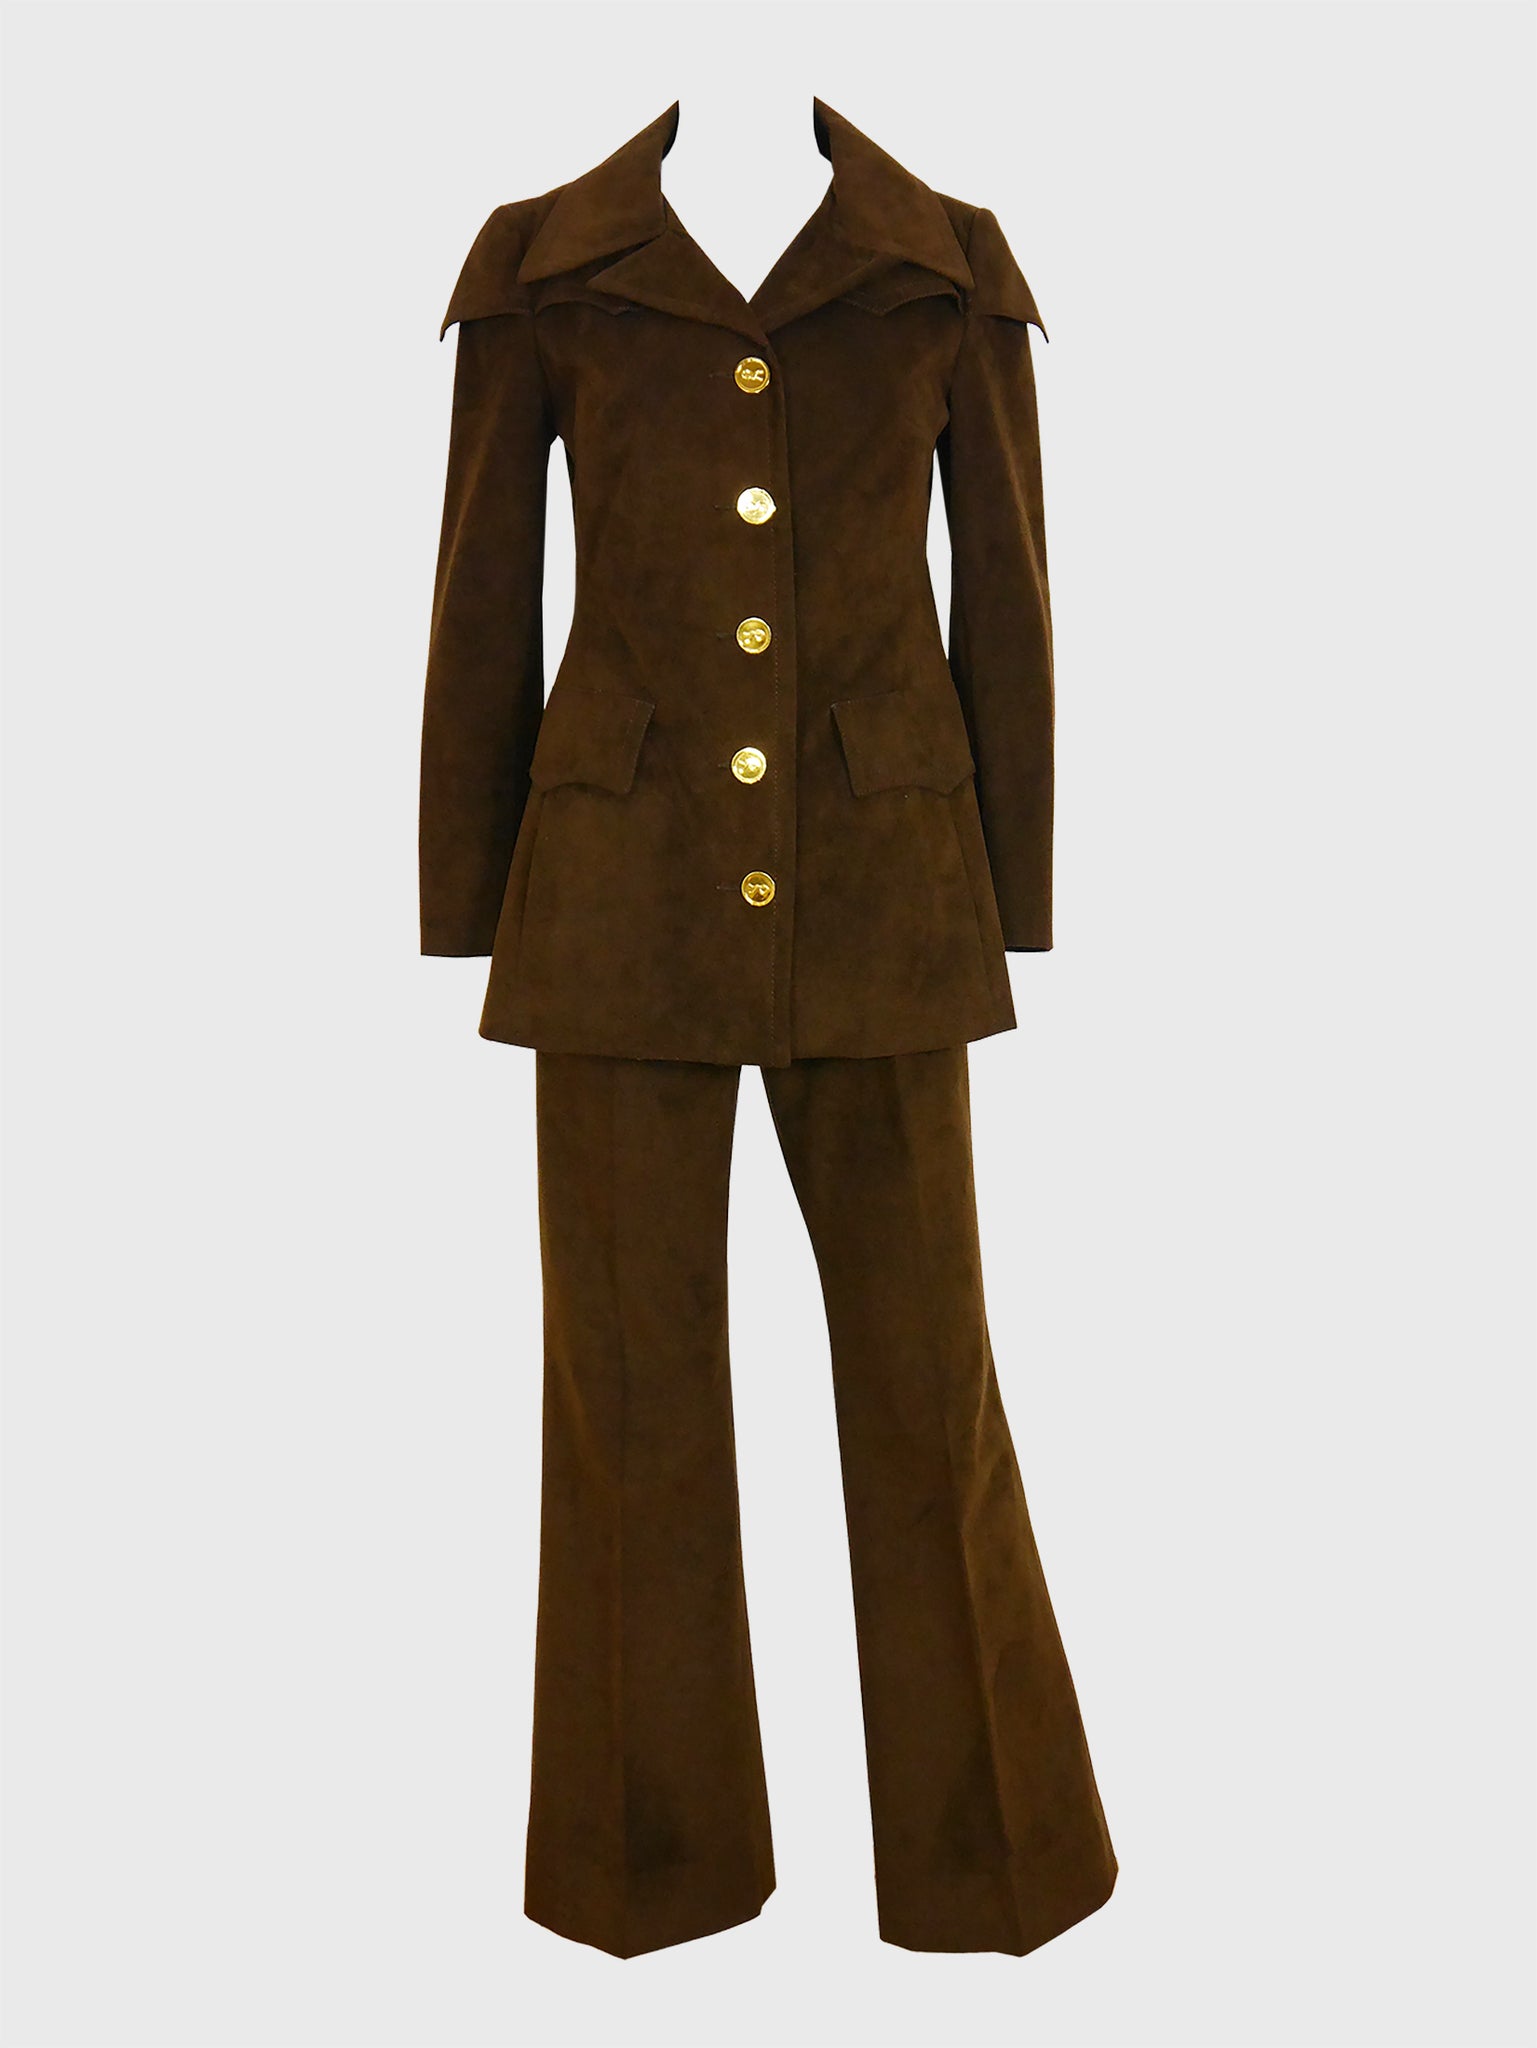 ROBERTA DI CAMERINO 1970s Vintage Ultrasuede Suit